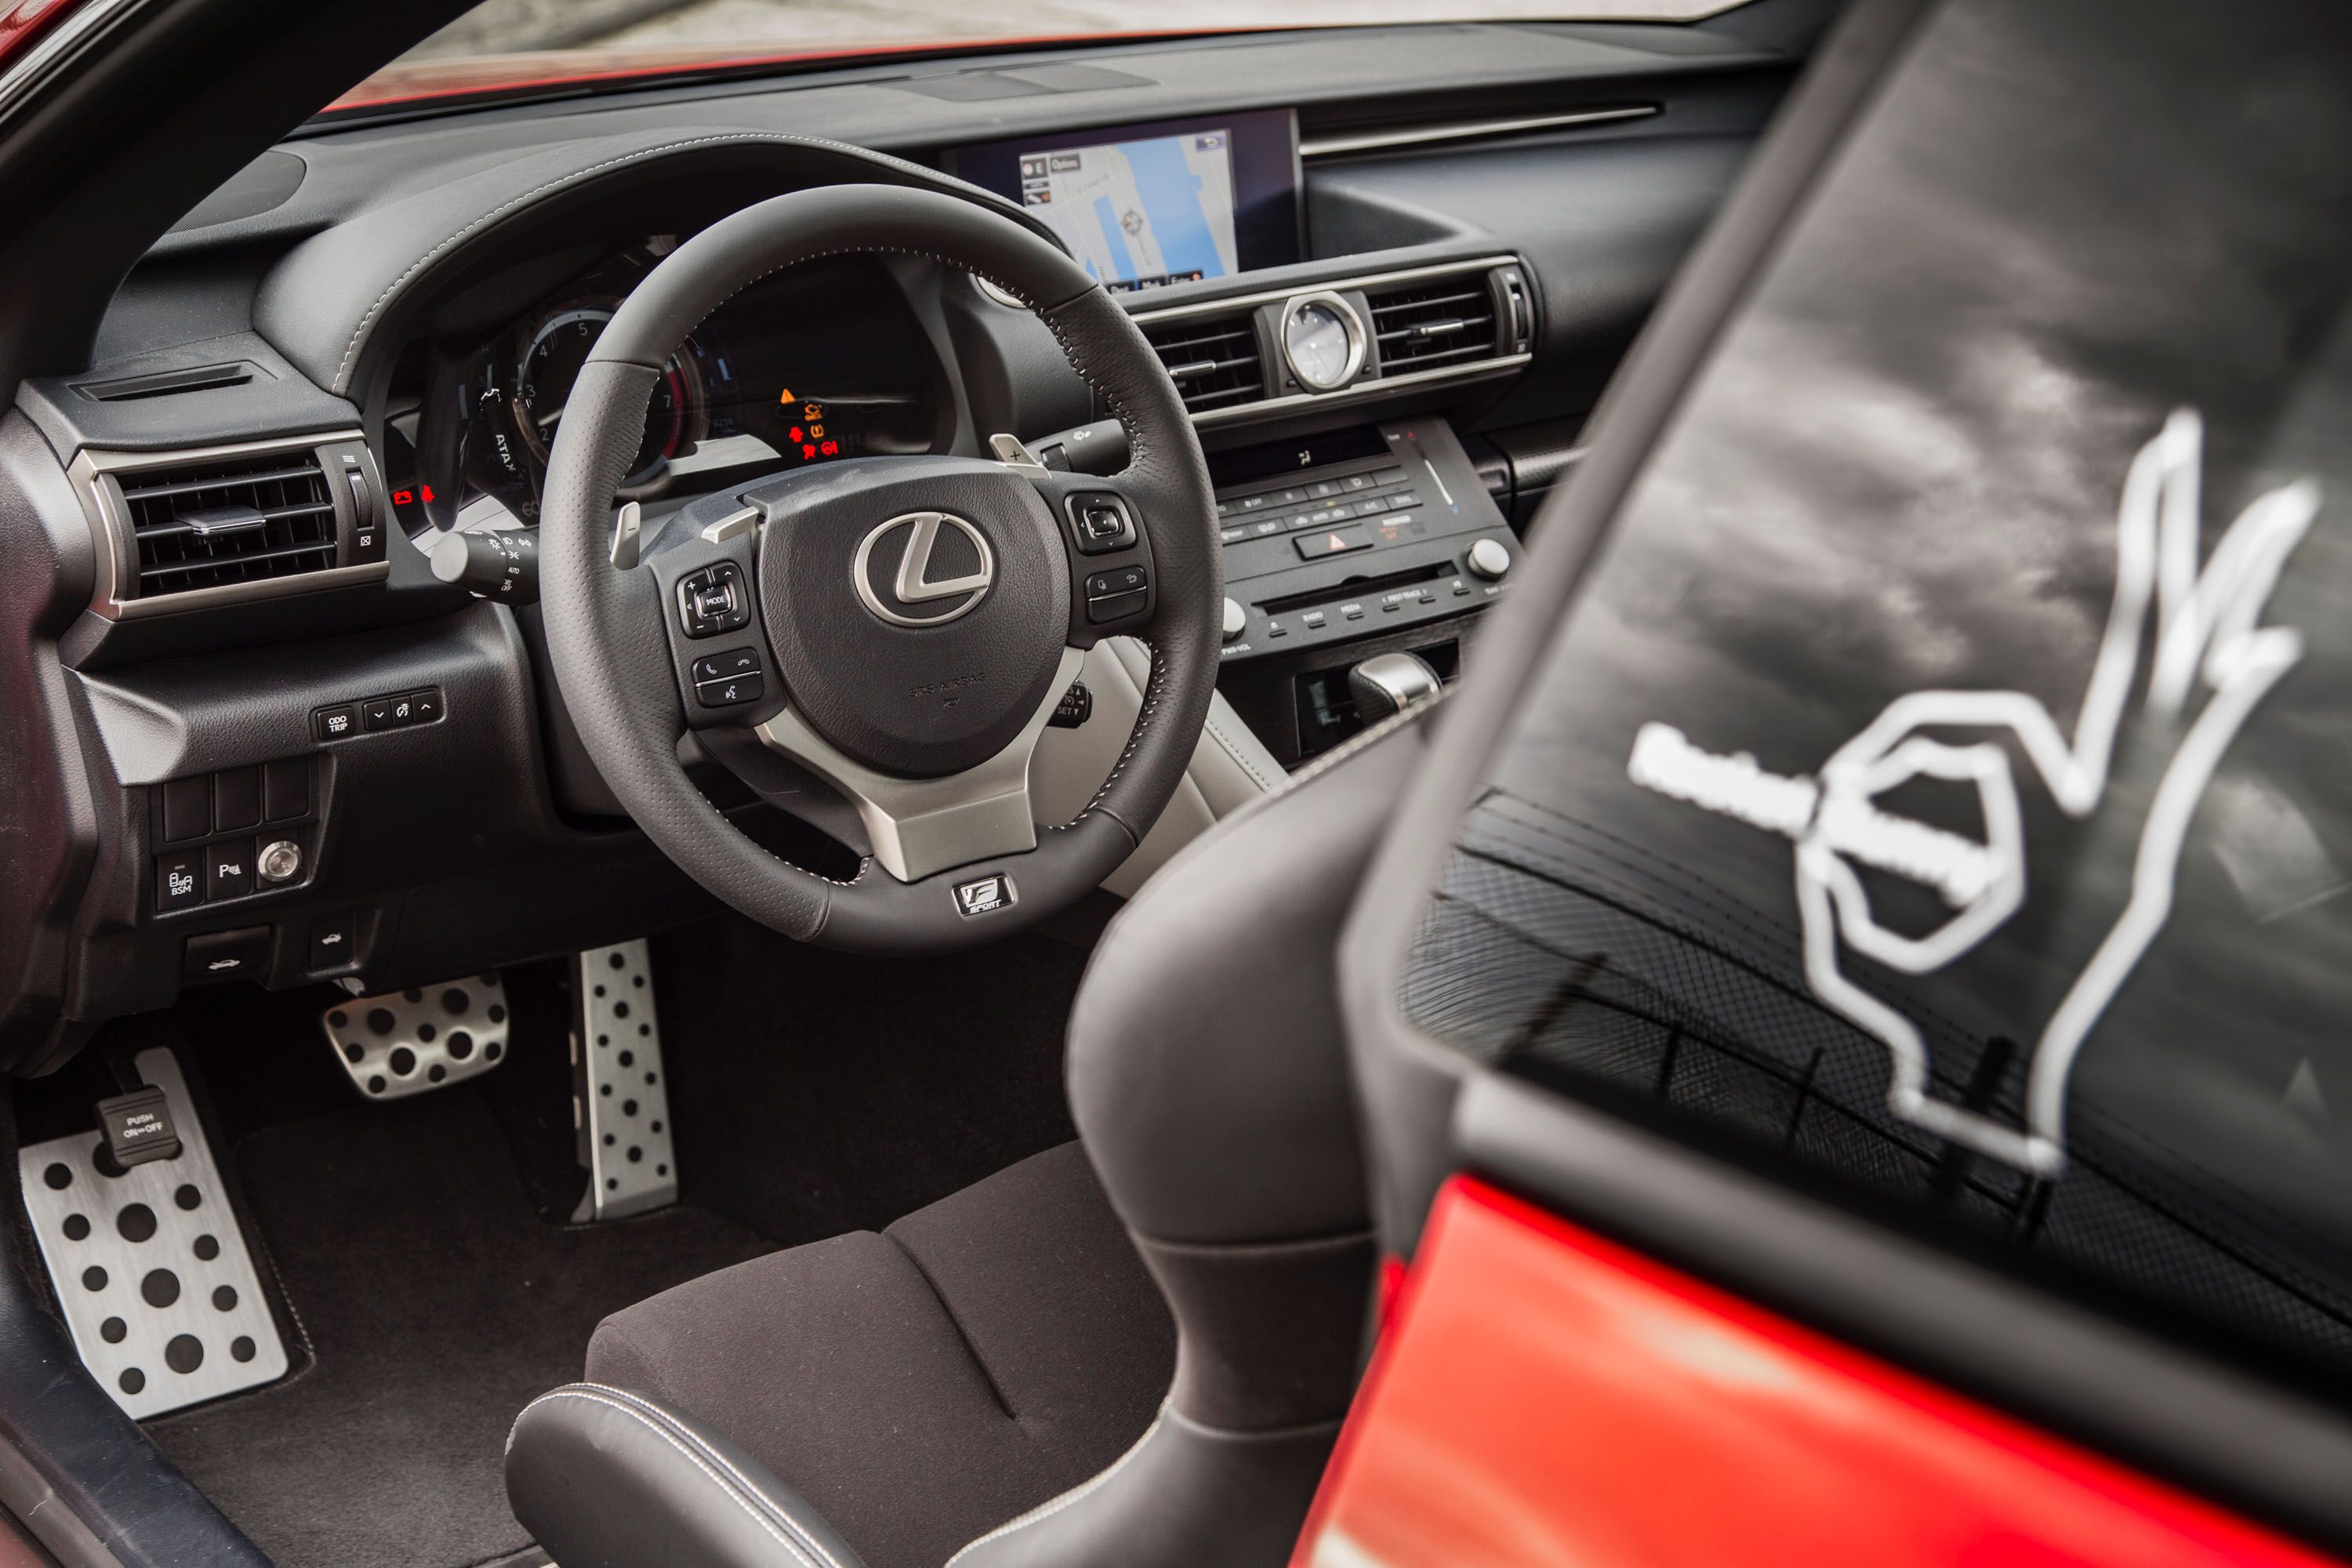 2015 Lexus RC 350 F SPORT by Gordon Ting/Beyond Marketing